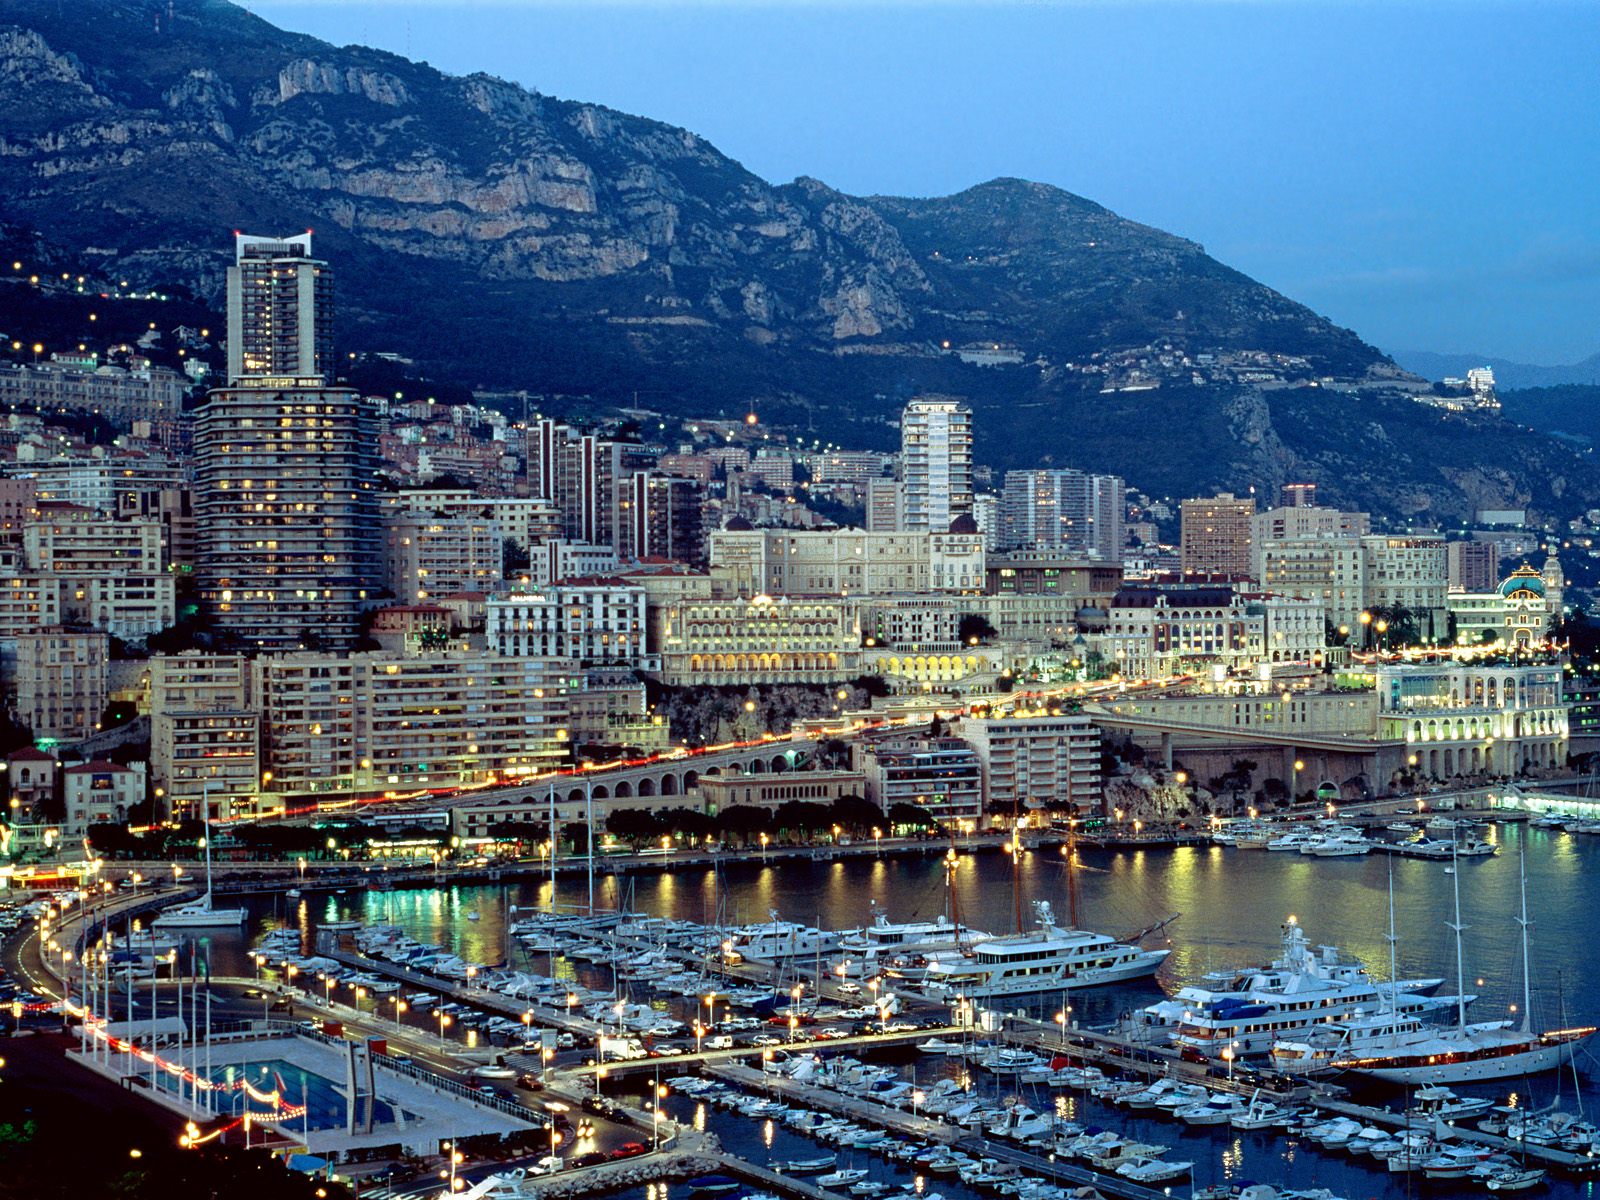 The Treasures of Monte Carlo are many ... photo by http://miriadna.com/